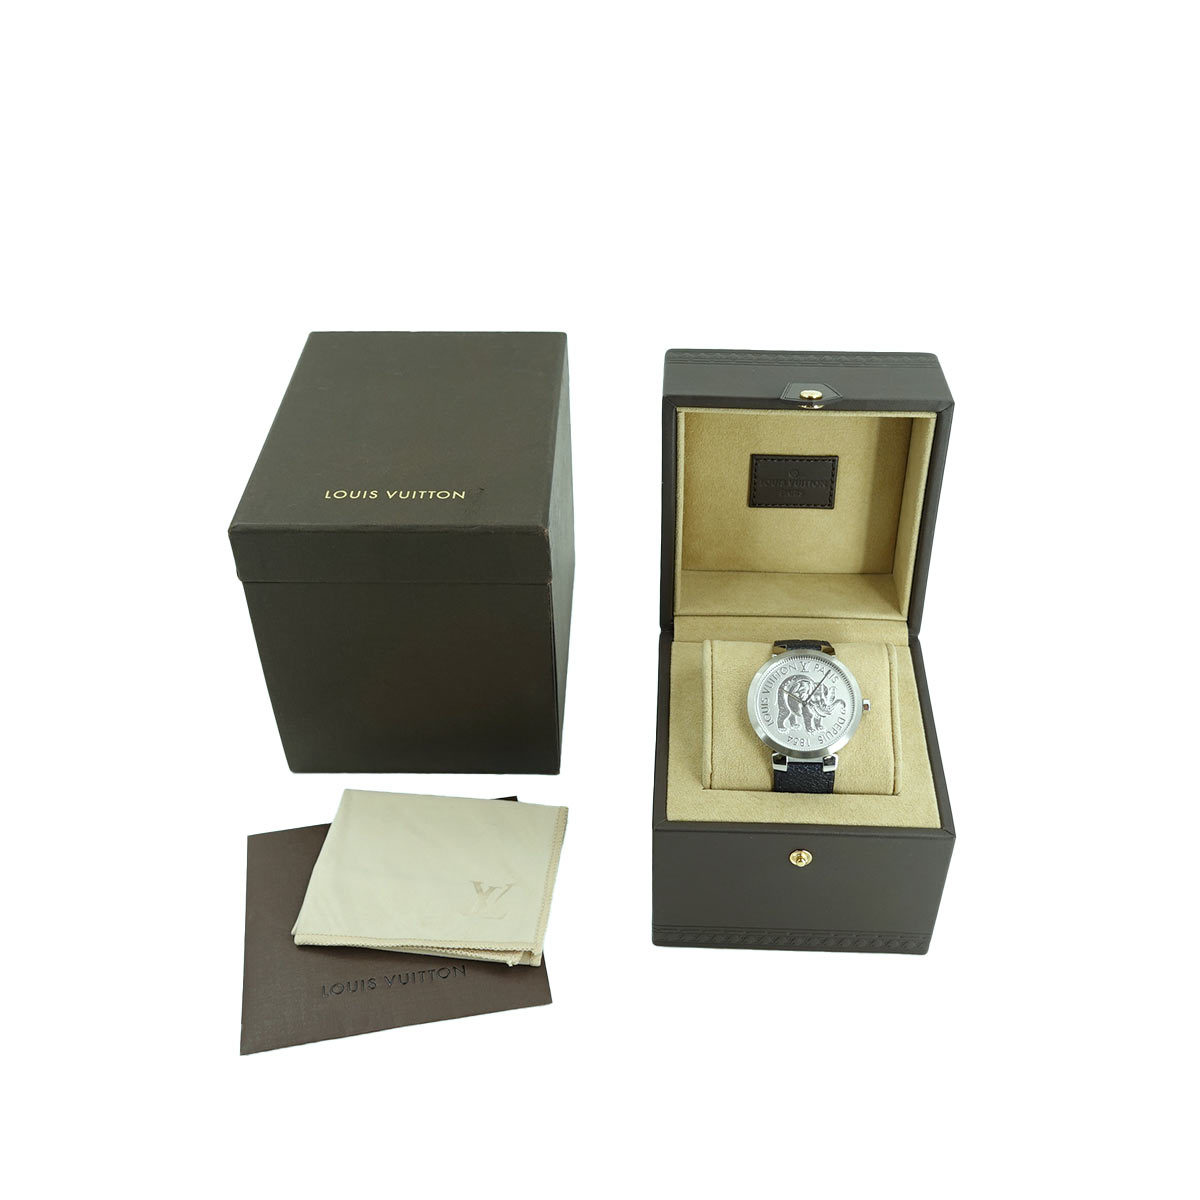  Louis Vuitton LOUIS VUITTON язык b-ru тонкий Savanna коричневый p man Brothers Q2D07 мужские наручные часы кварц Tambour 90191061